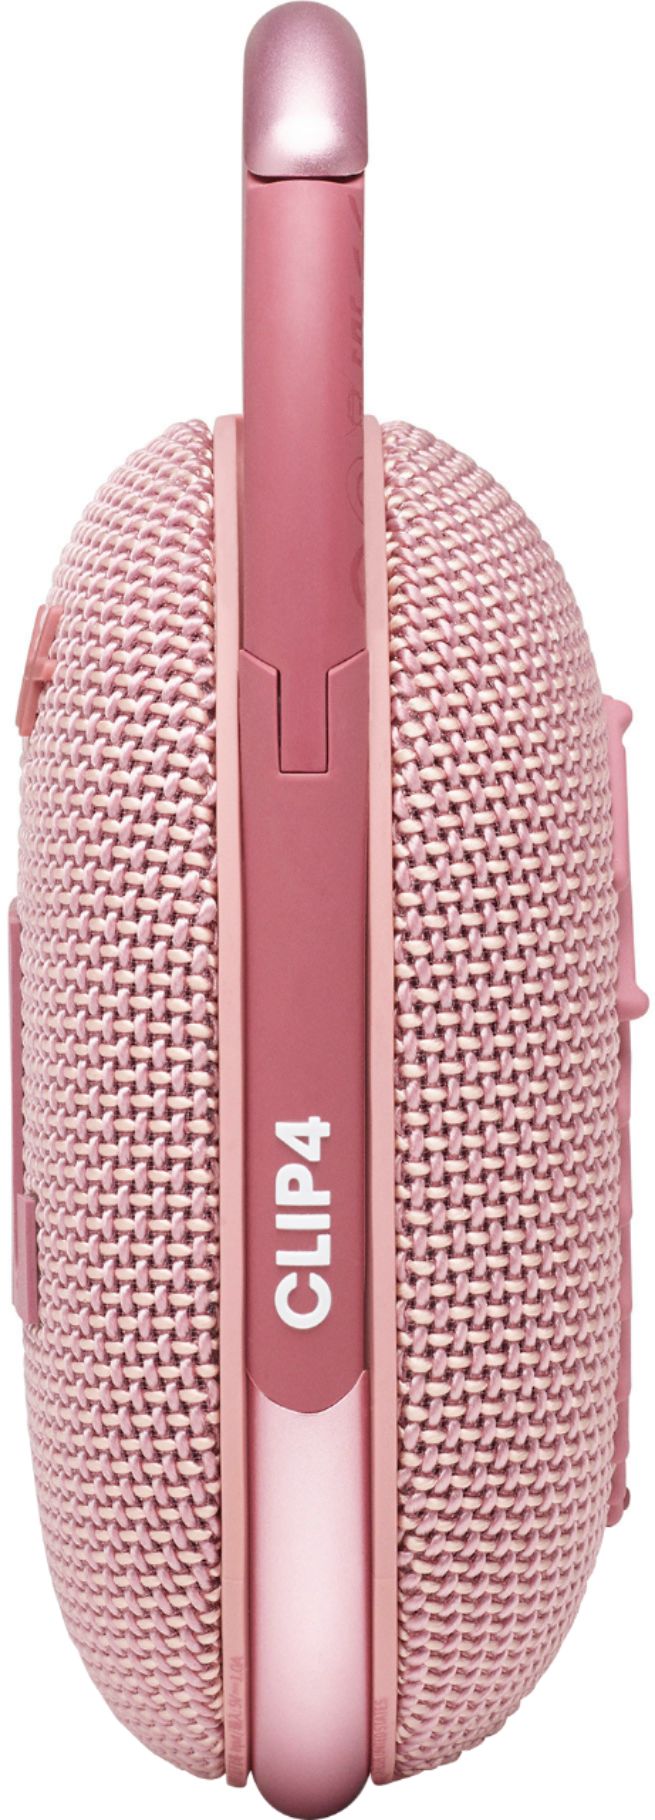 JBL - CLIP4 Portable Bluetooth Speaker - Pink_9